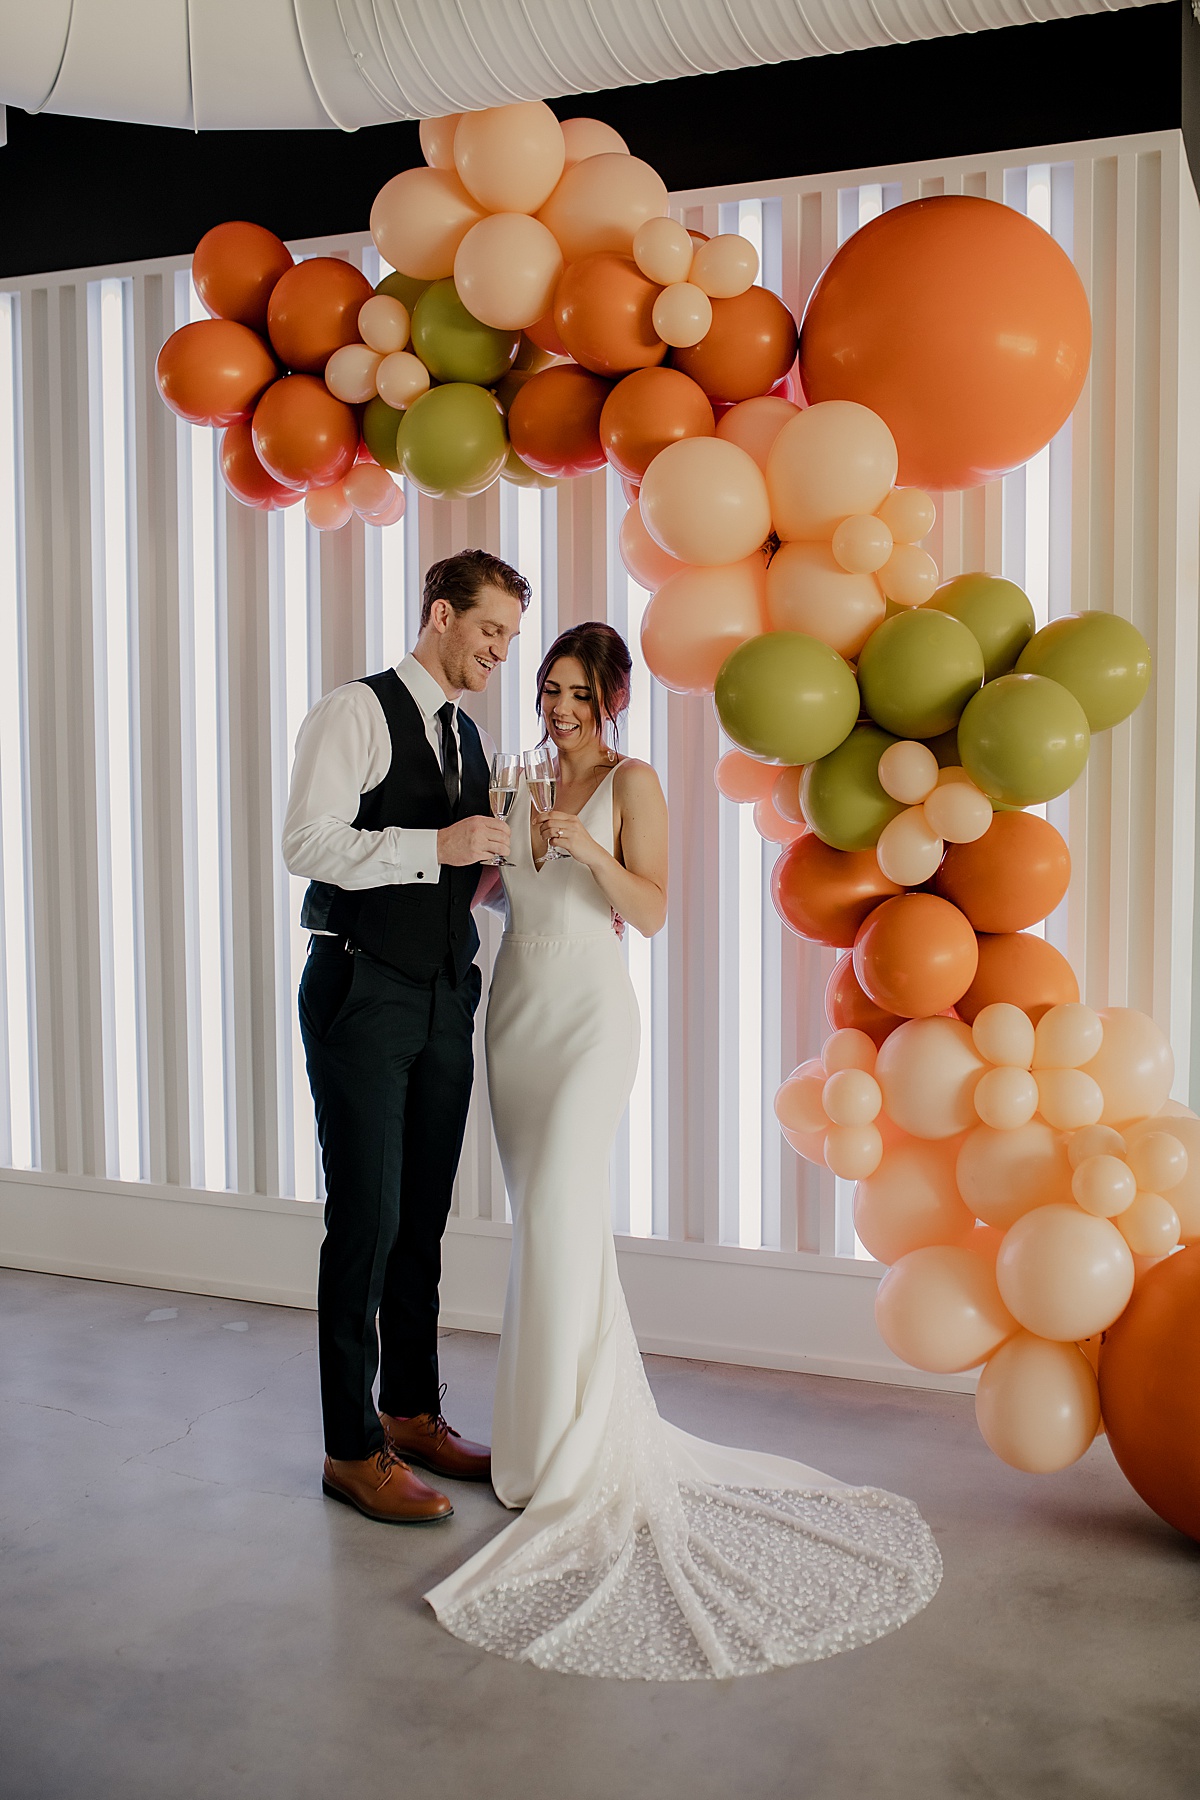 Colorful artistic wedding balloon arch at The Maverick KC.